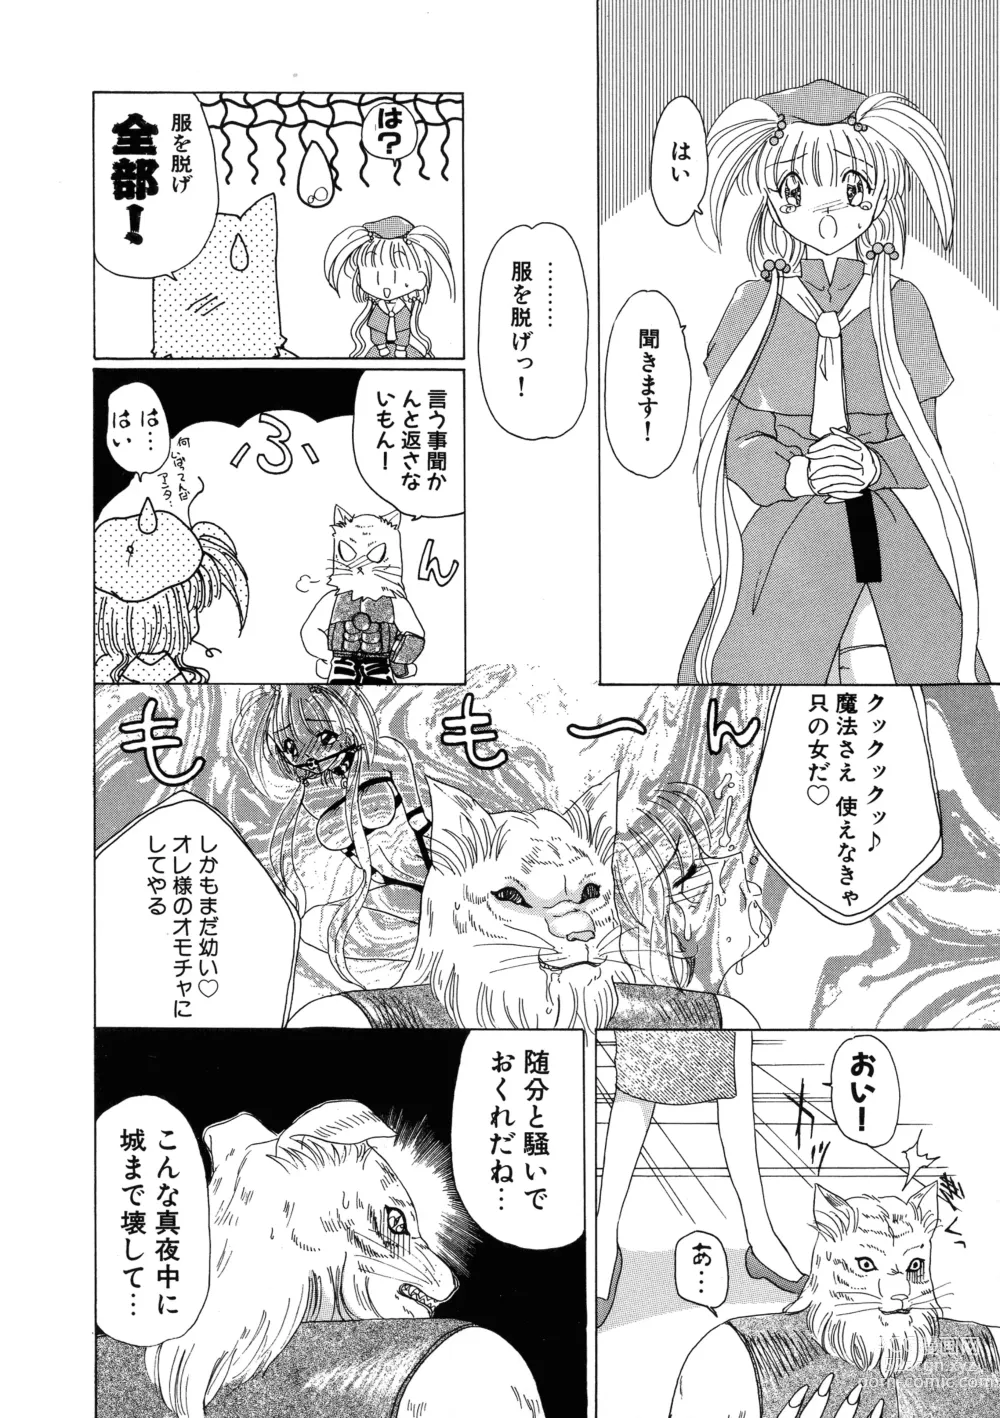 Page 8 of manga Mahou Trouble